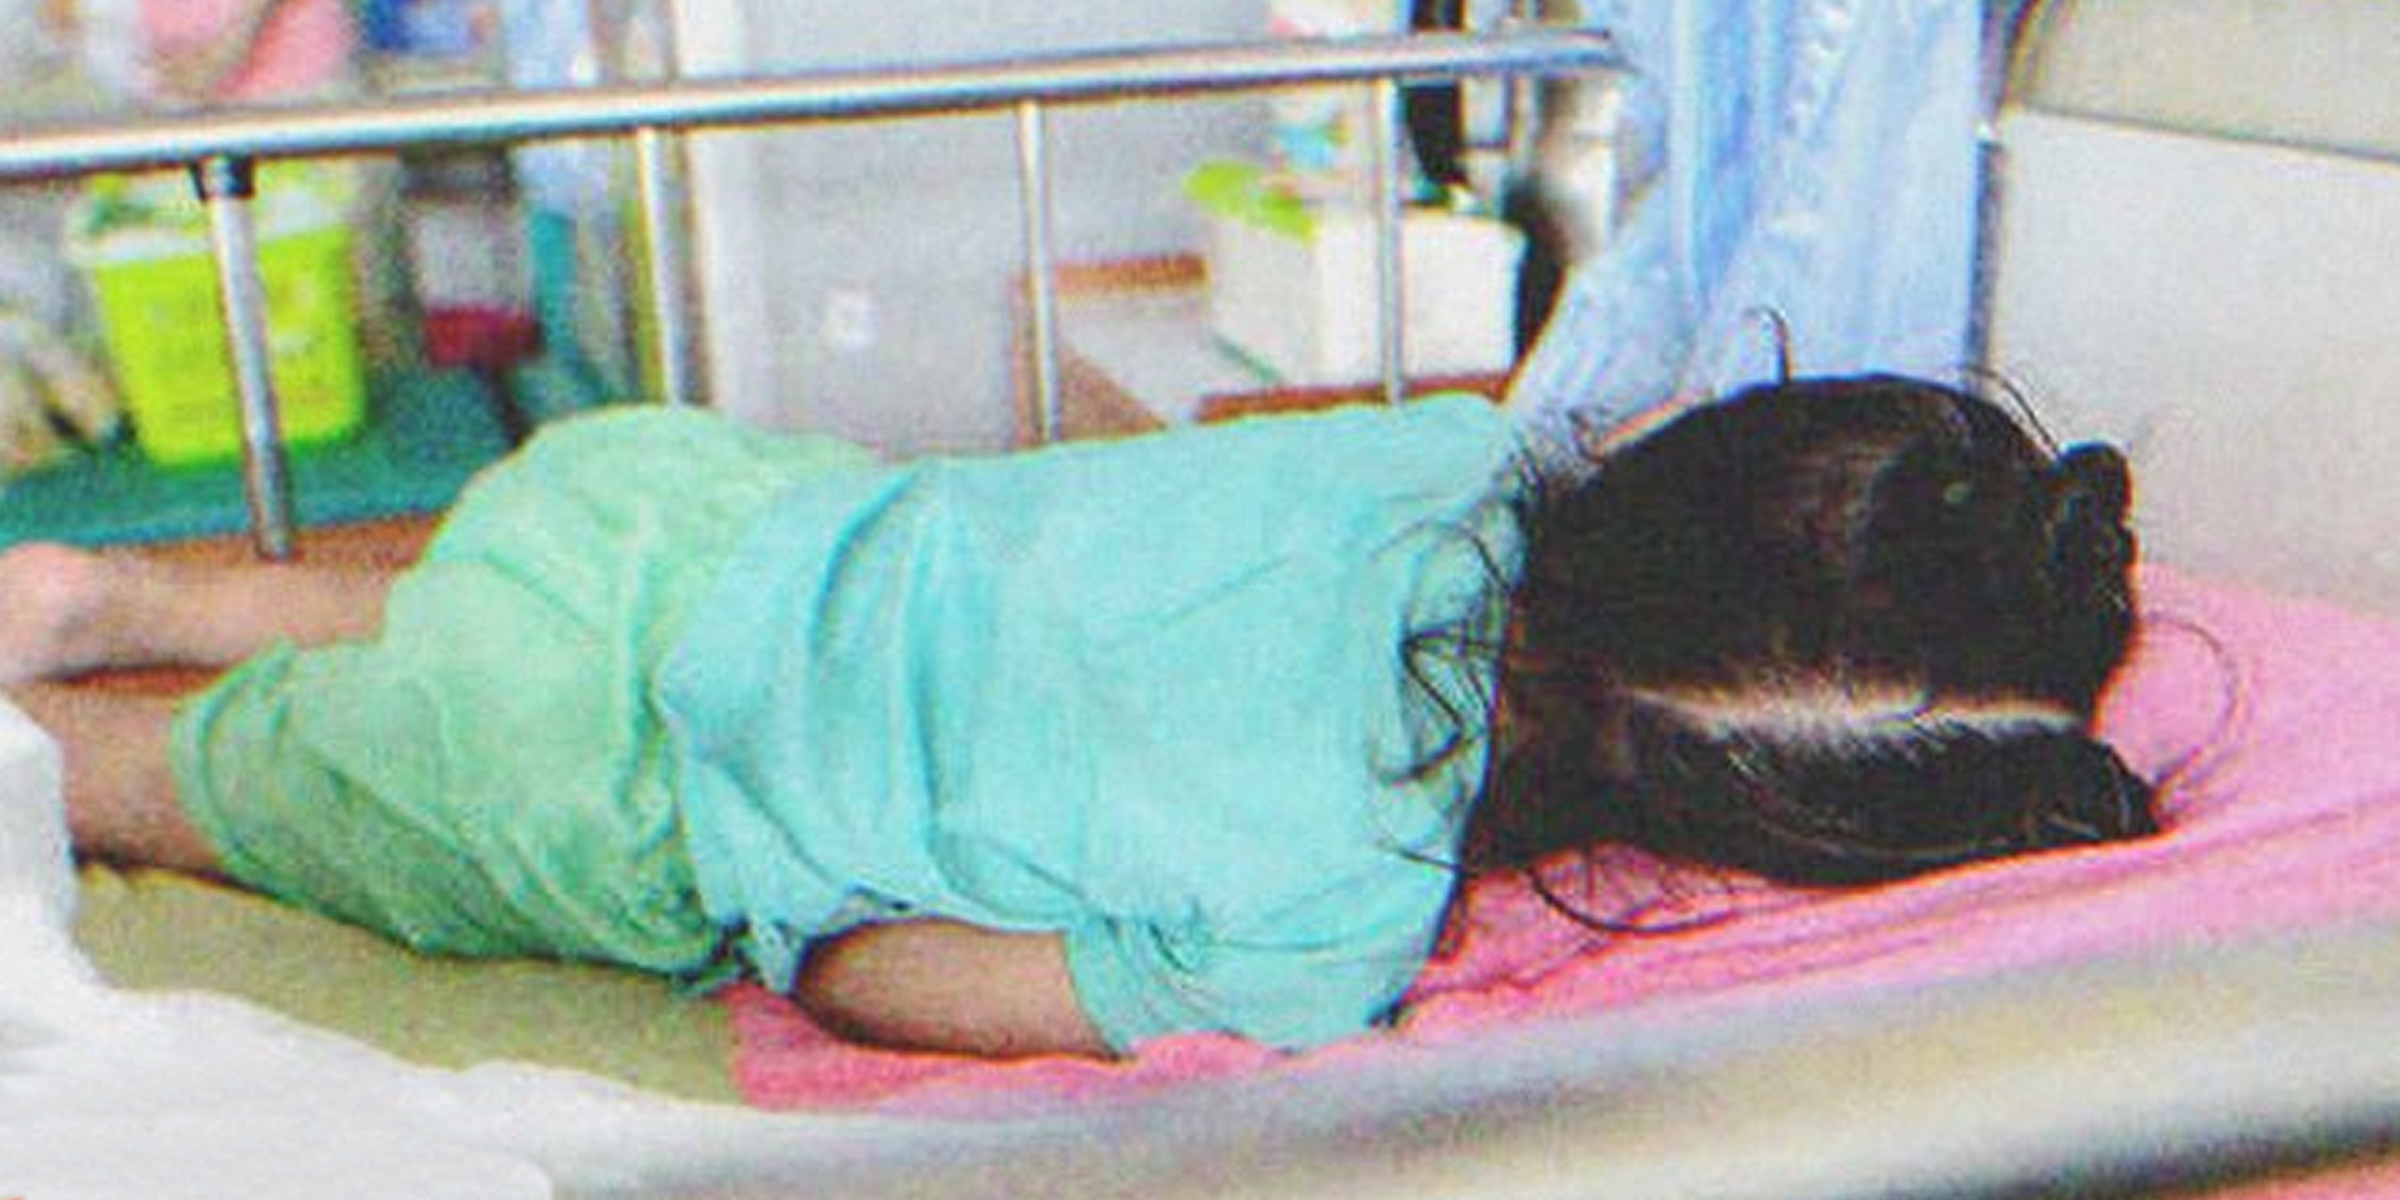 Niña tumbada en una cama de hospital | Foto: Shutterstock